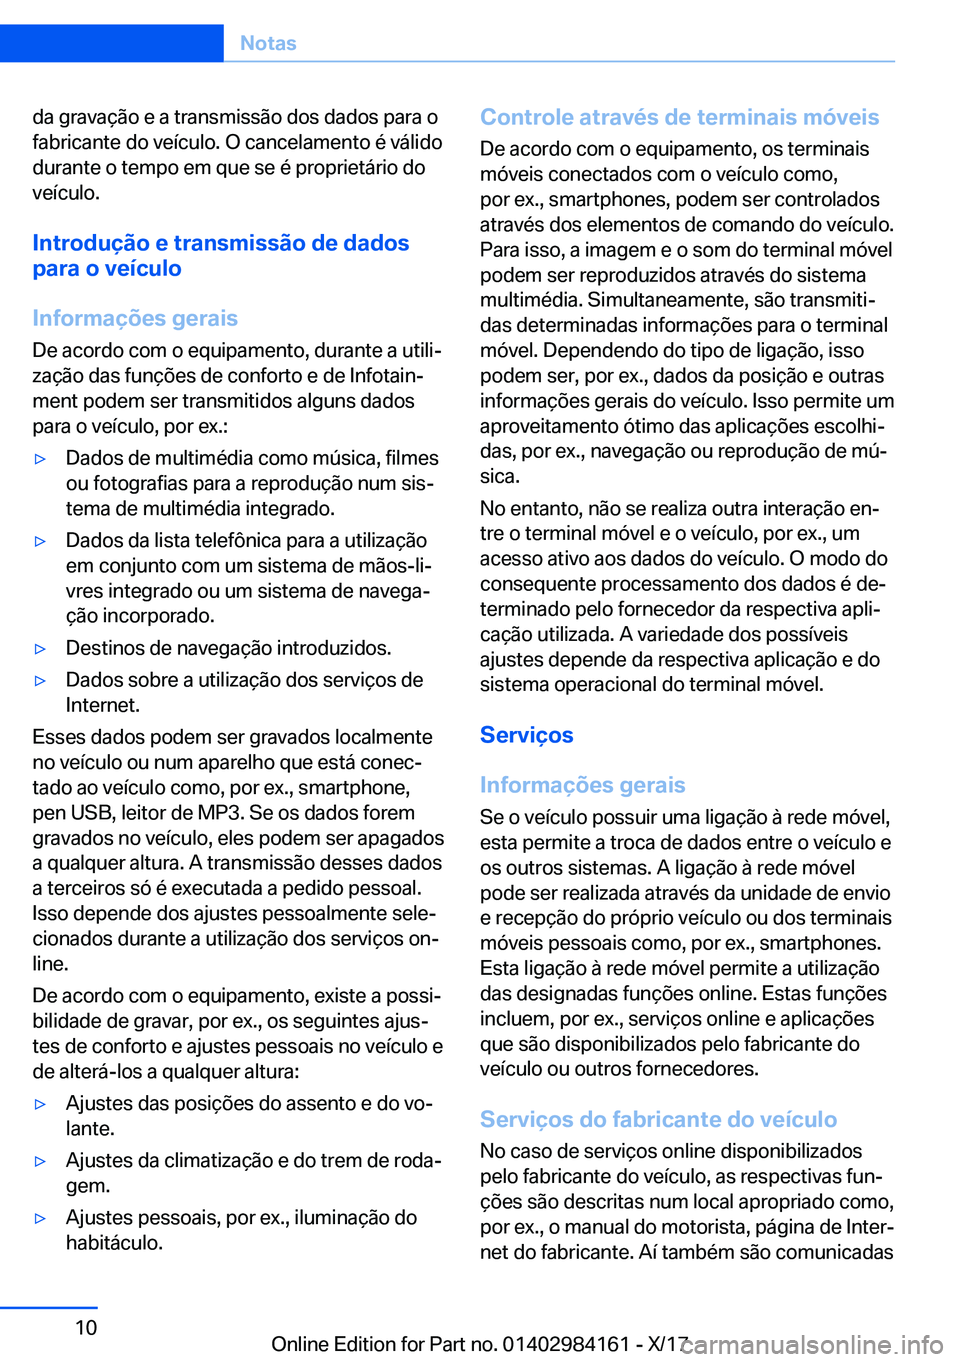 BMW 2 SERIES COUPE 2018  Manual do condutor (in Portuguese) �d�a� �g�r�a�v�a�